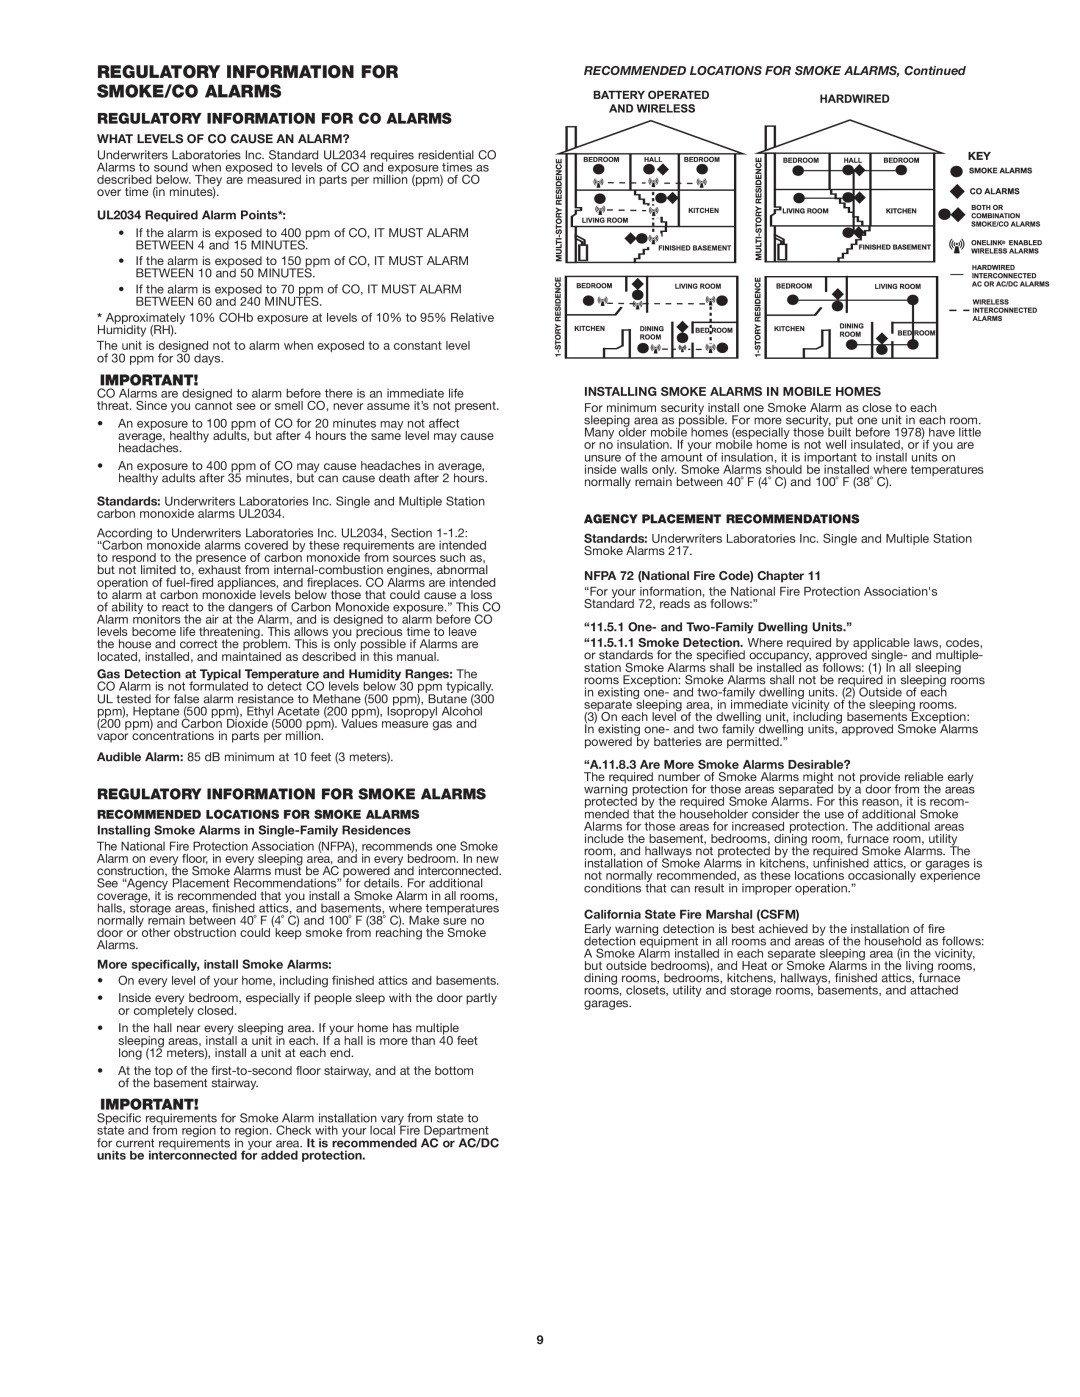 First Alert SC7010B user manual Regulatory Information For Smoke/Co Alarms, Regulatory Information For Co Alarms 